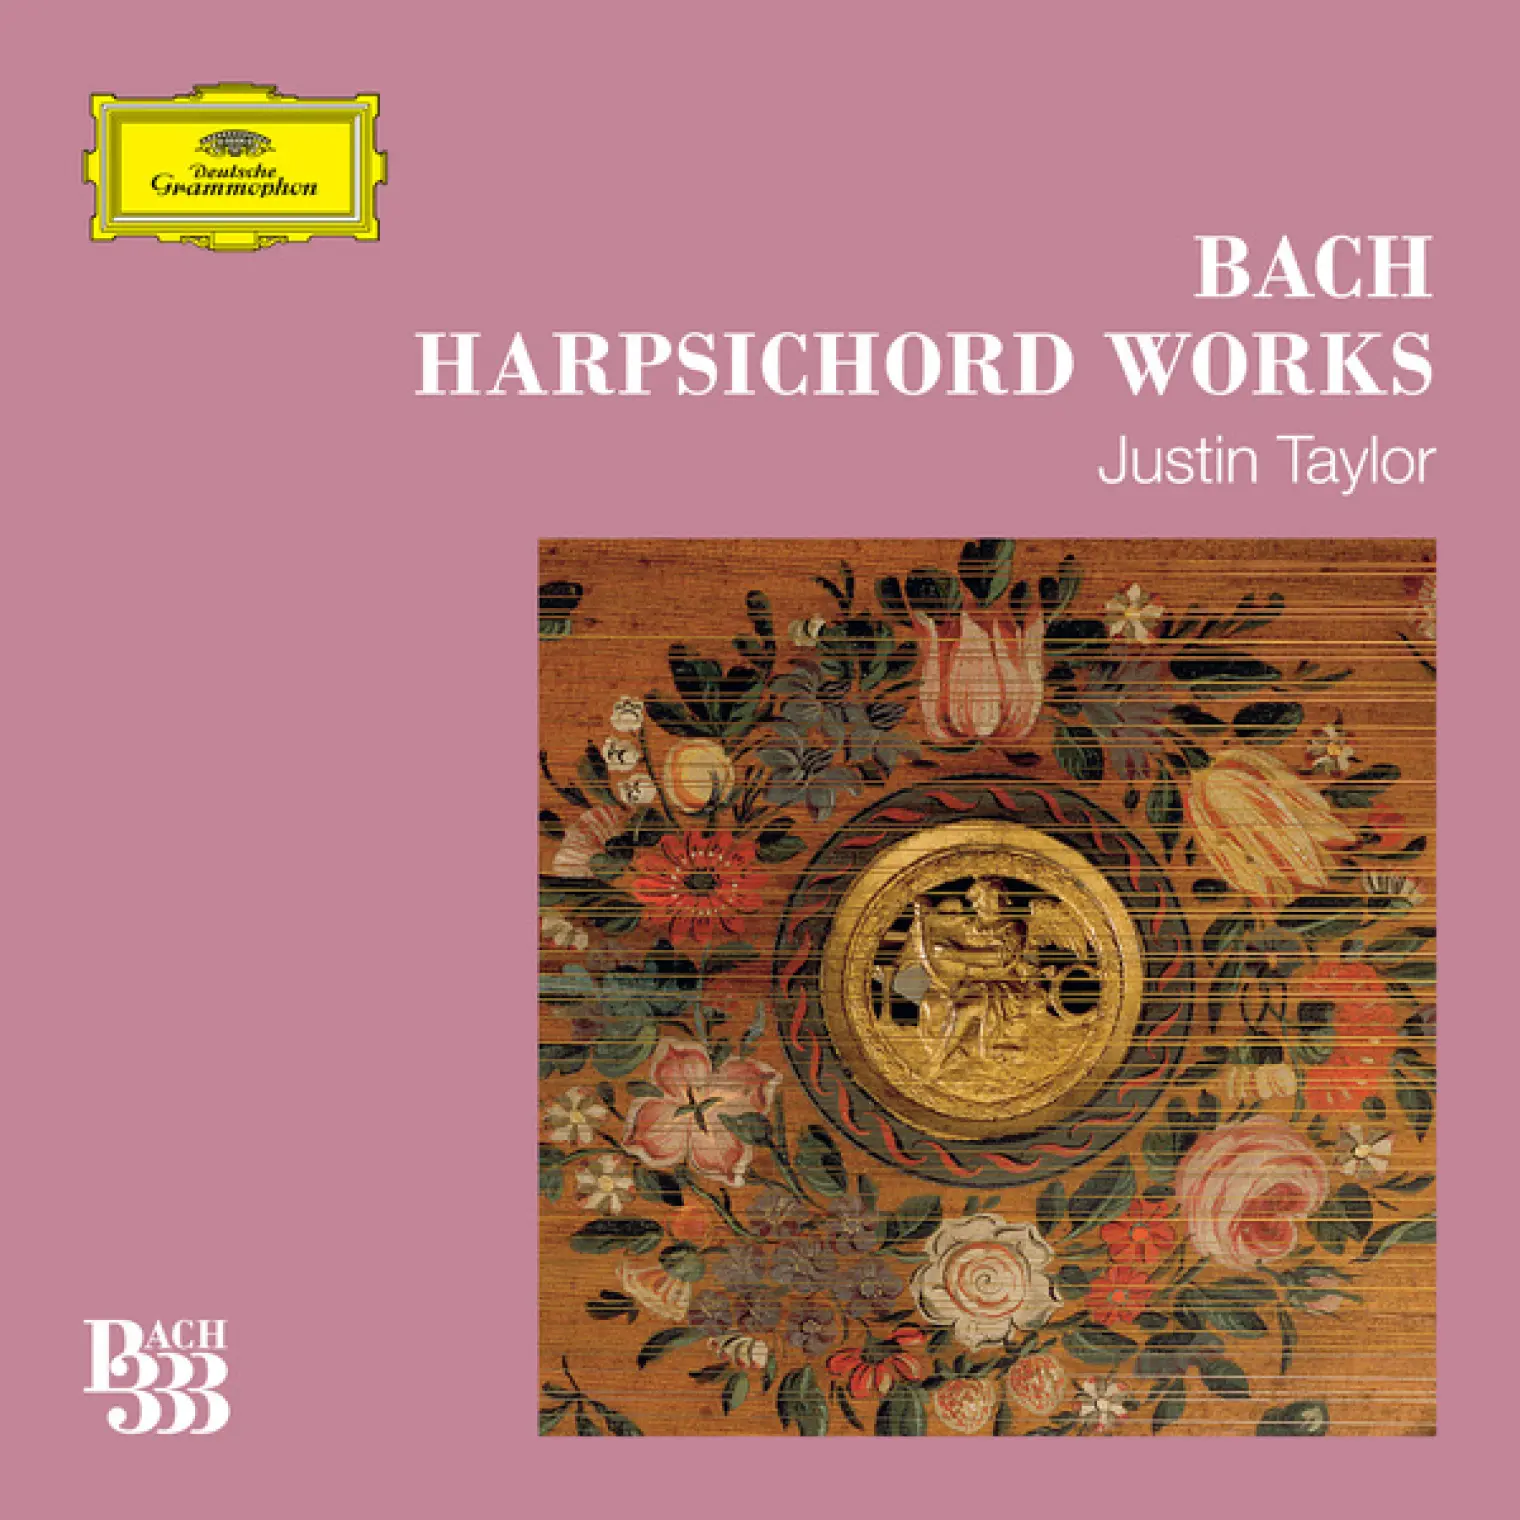 Bach 333: Harpsichord Works -  Justin Taylor 